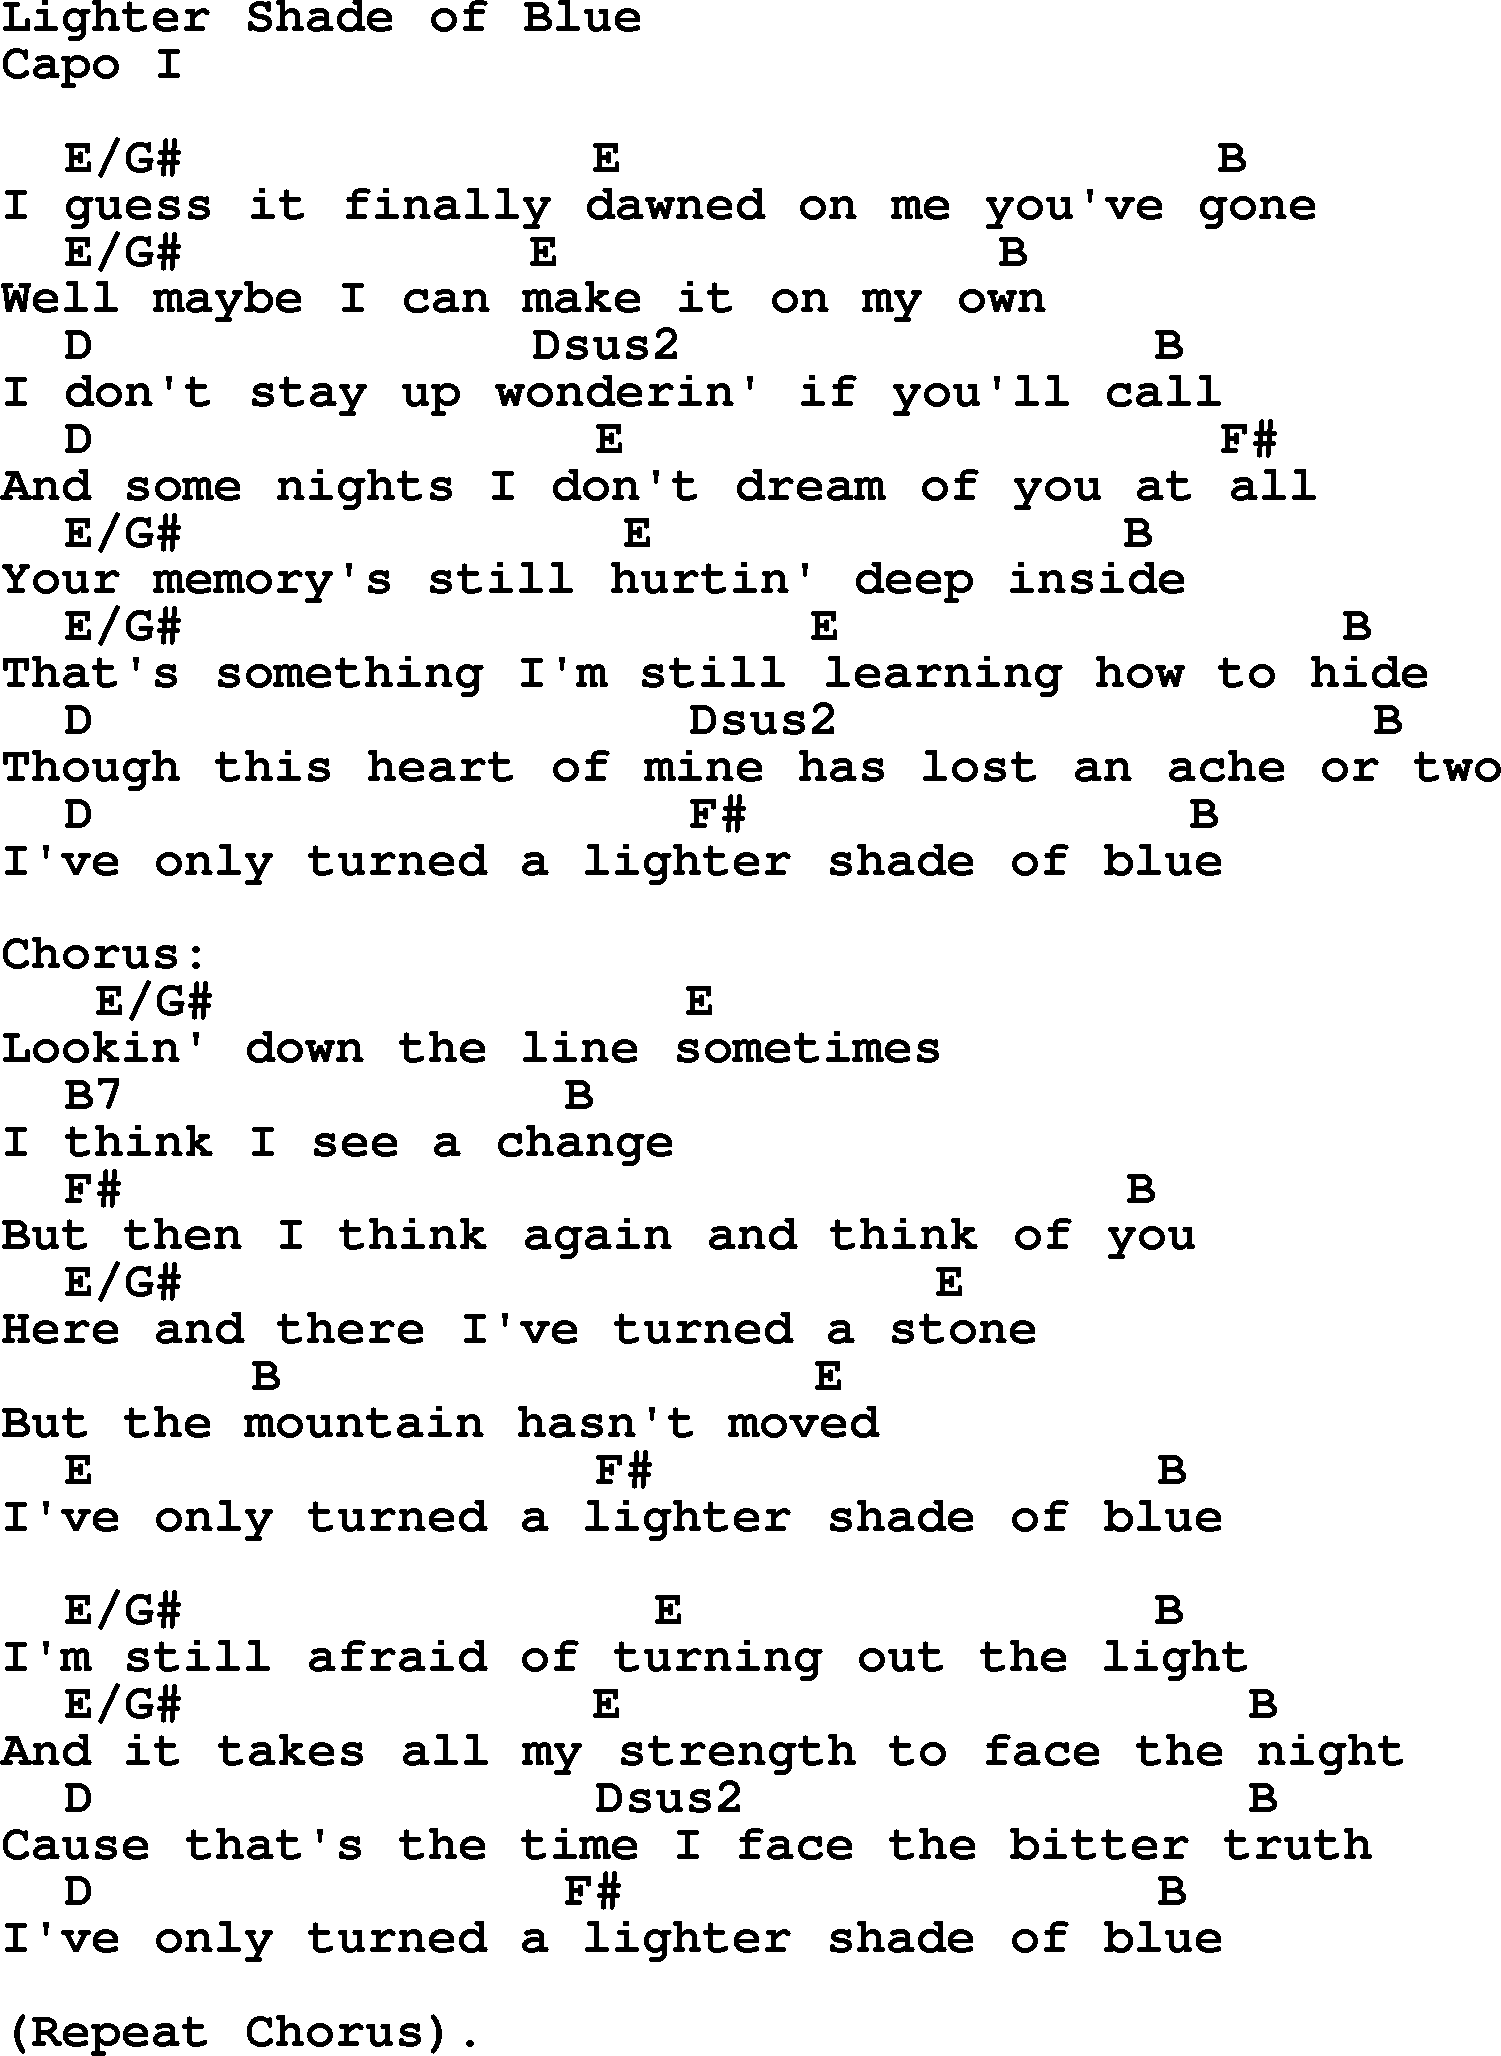 Reba McEntire song: Lighter Shade of Blue, lyrics and chords